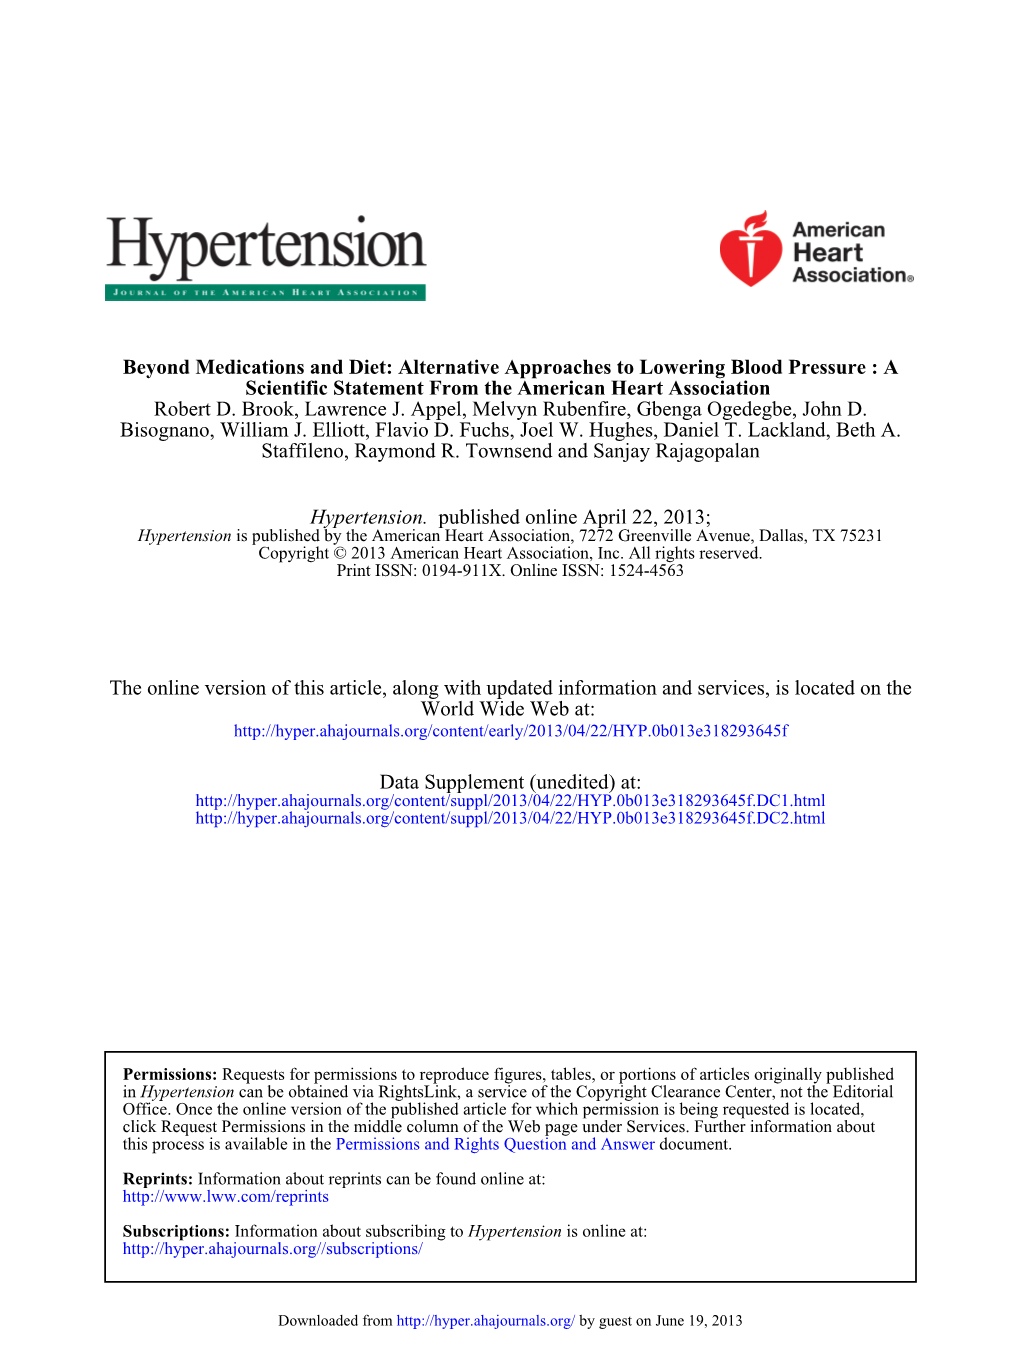 AHA Statement on Hypertension 2013